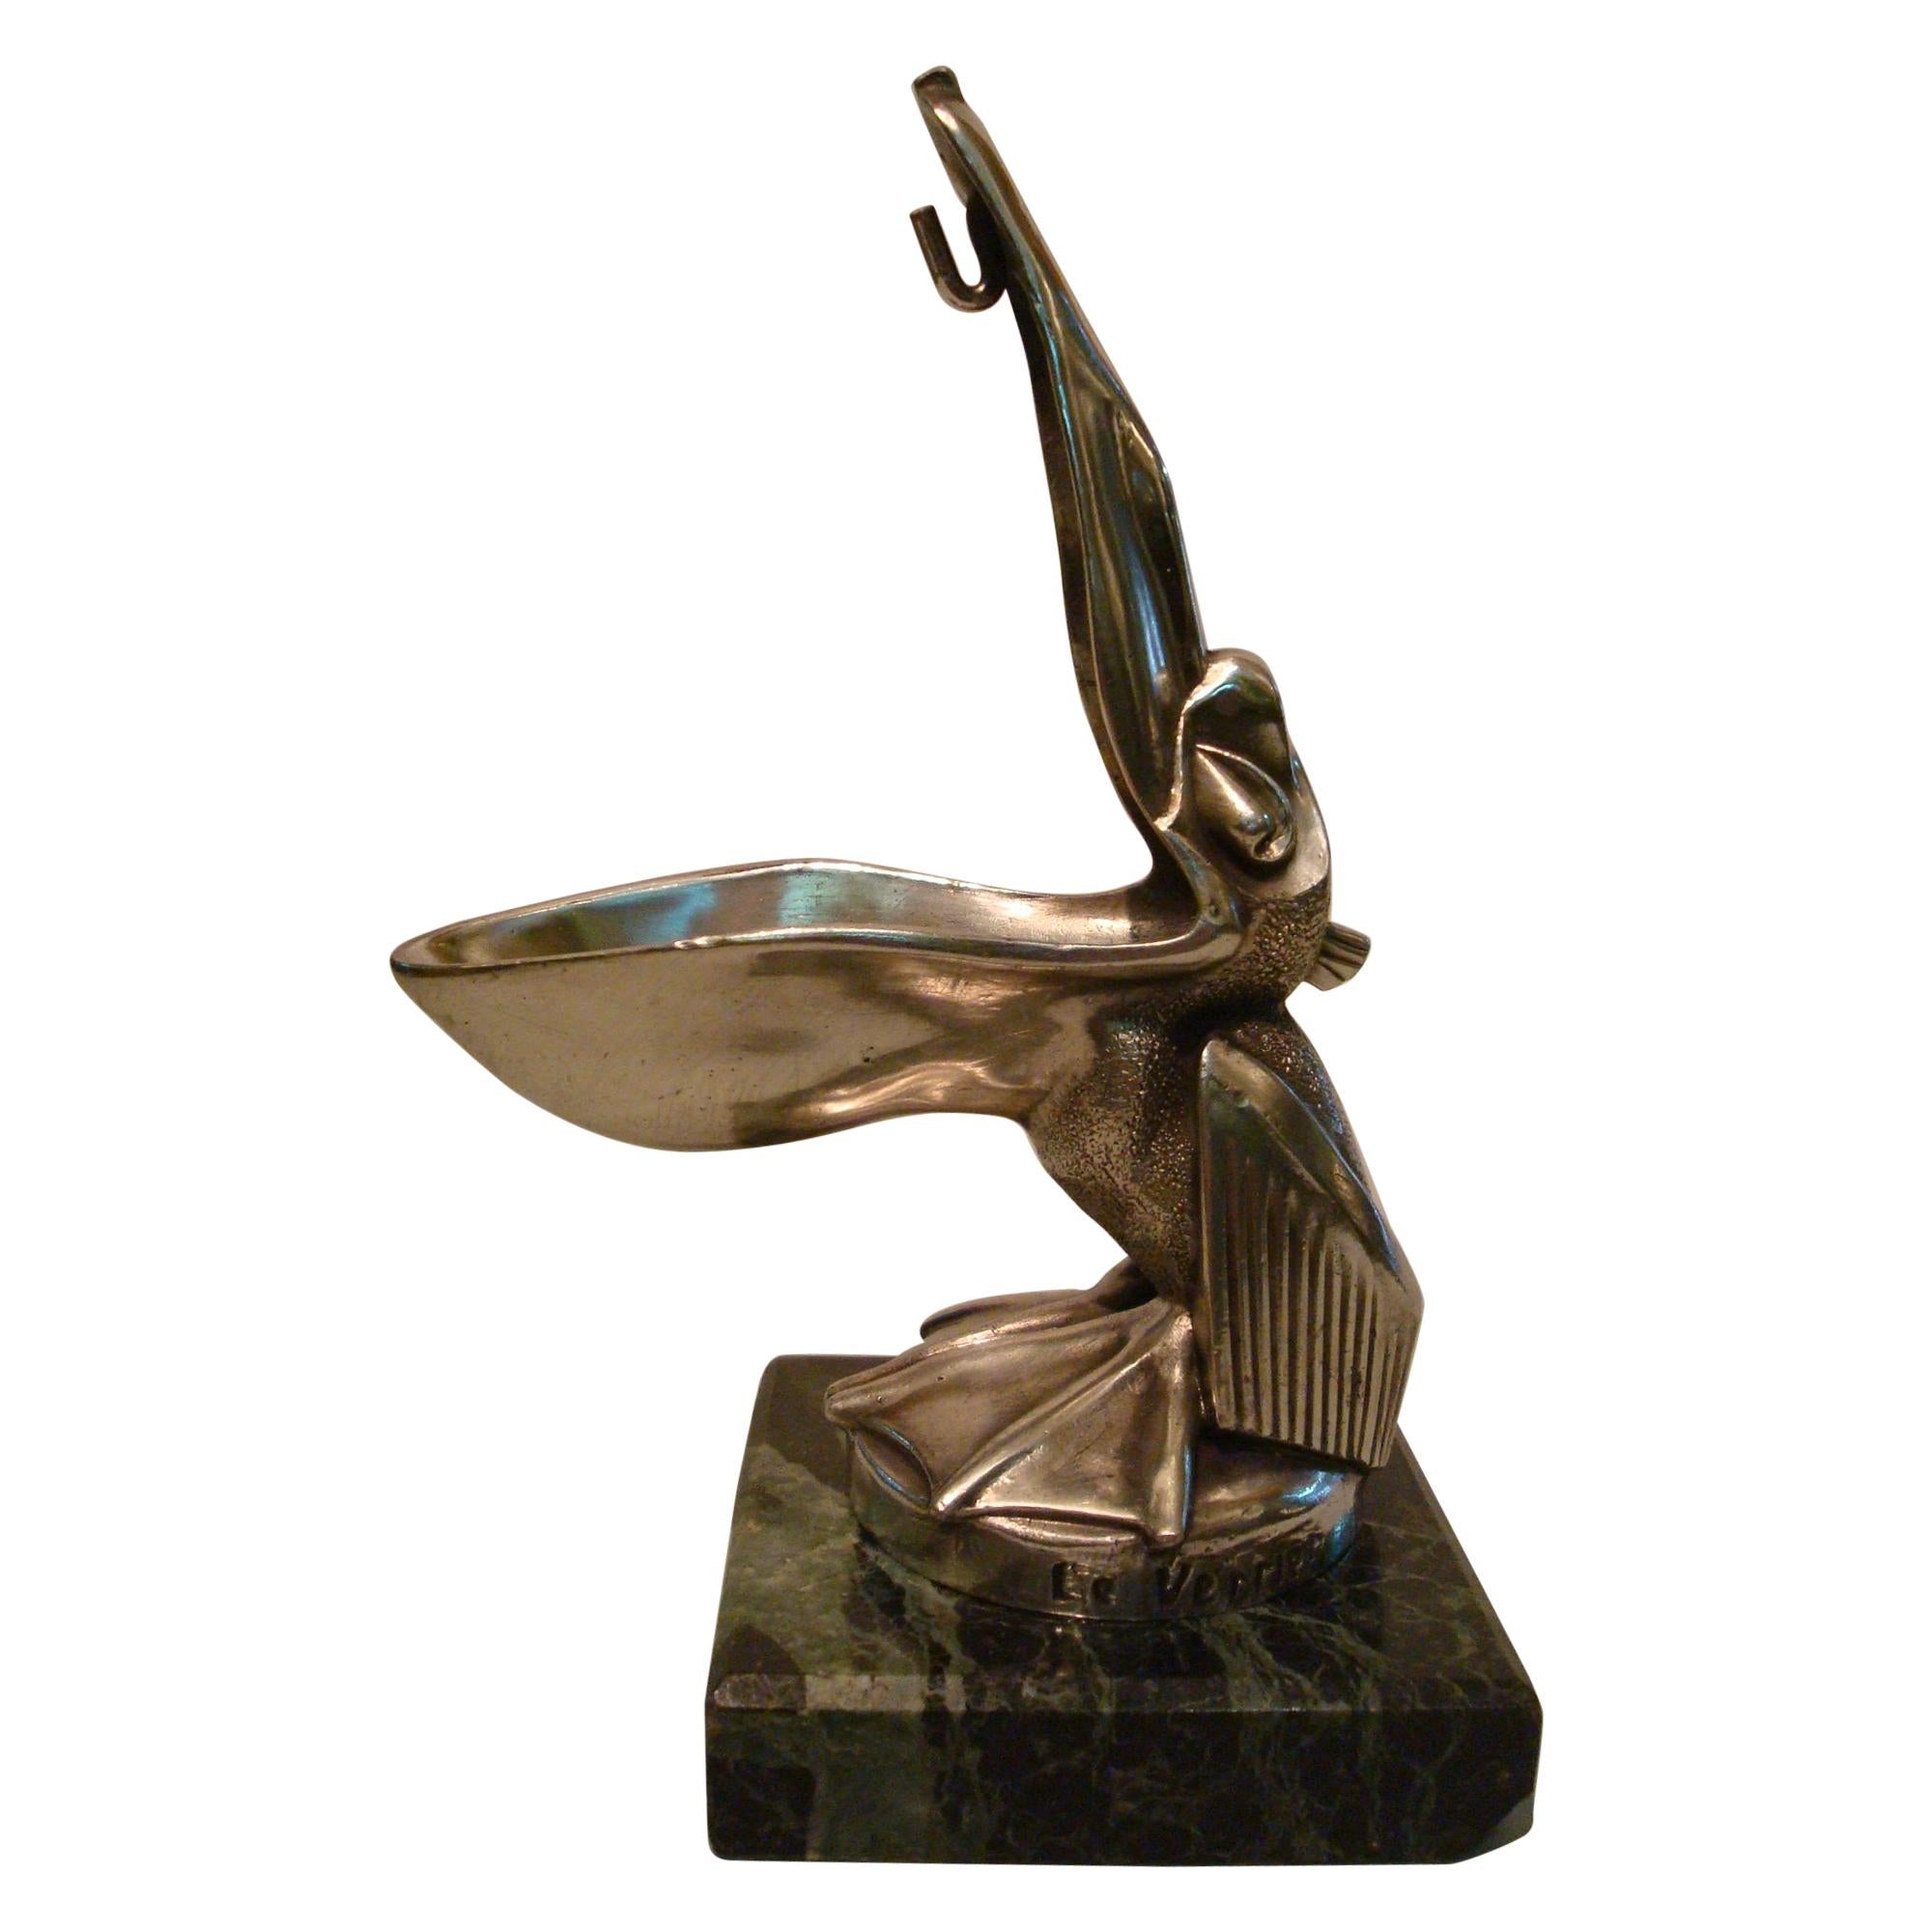 Art Deco Pelican Le Verrier Sculpture Car Mascot Paperweight Packet Watch Holder